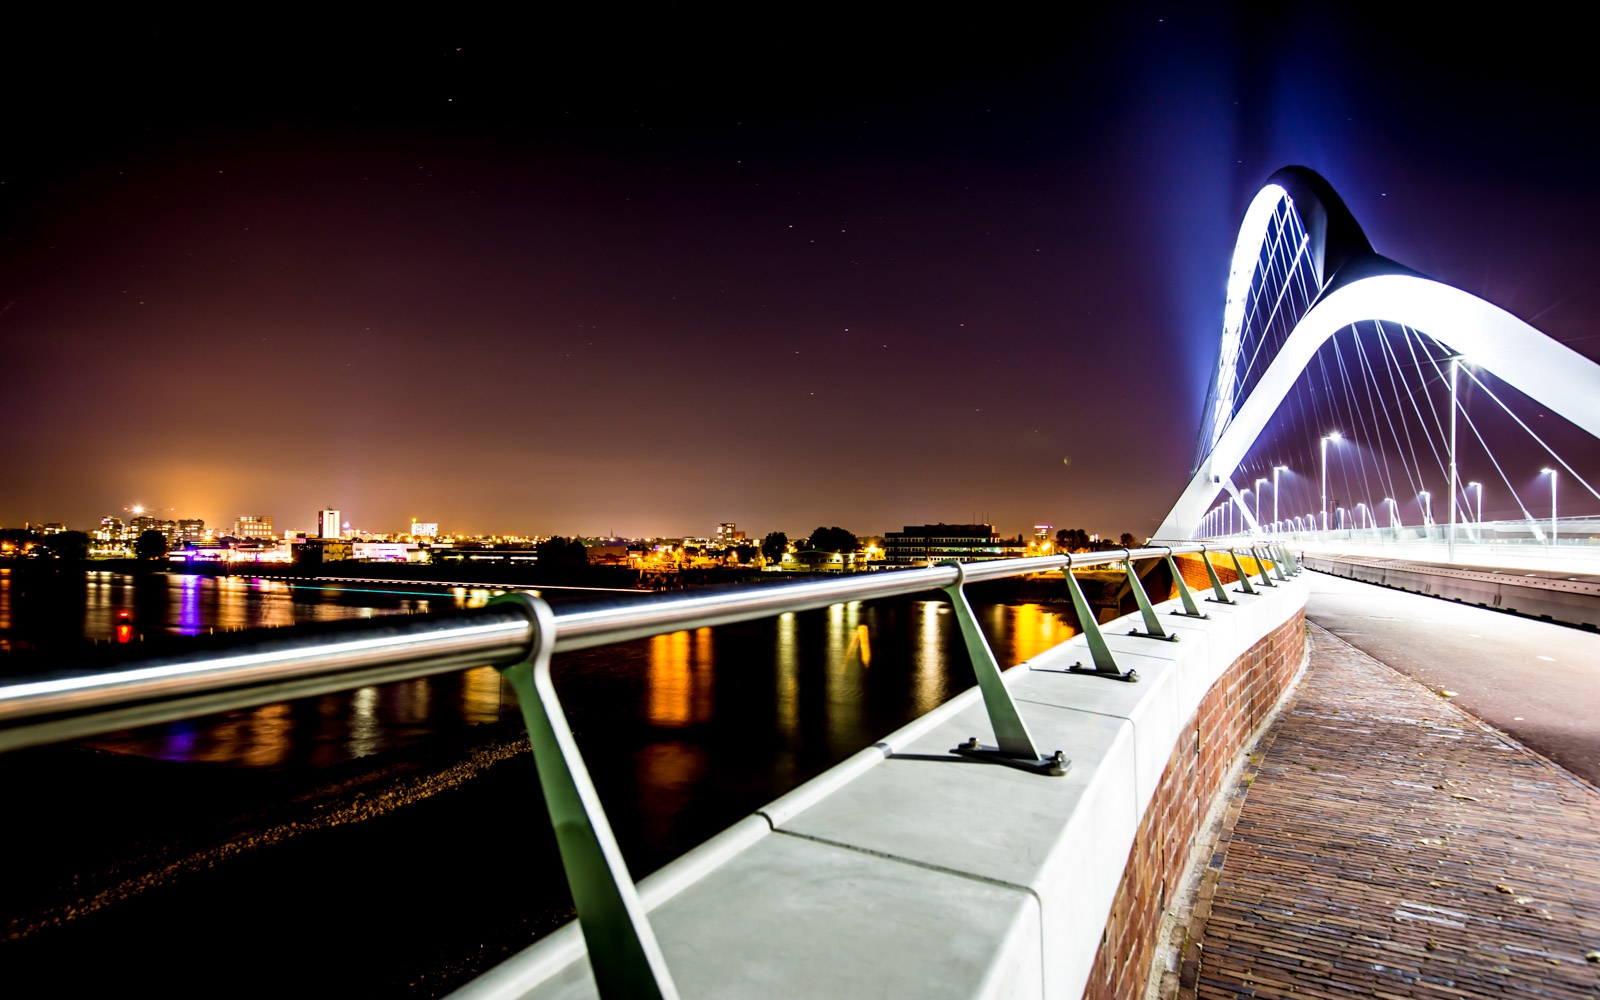 Nijmegen at Night